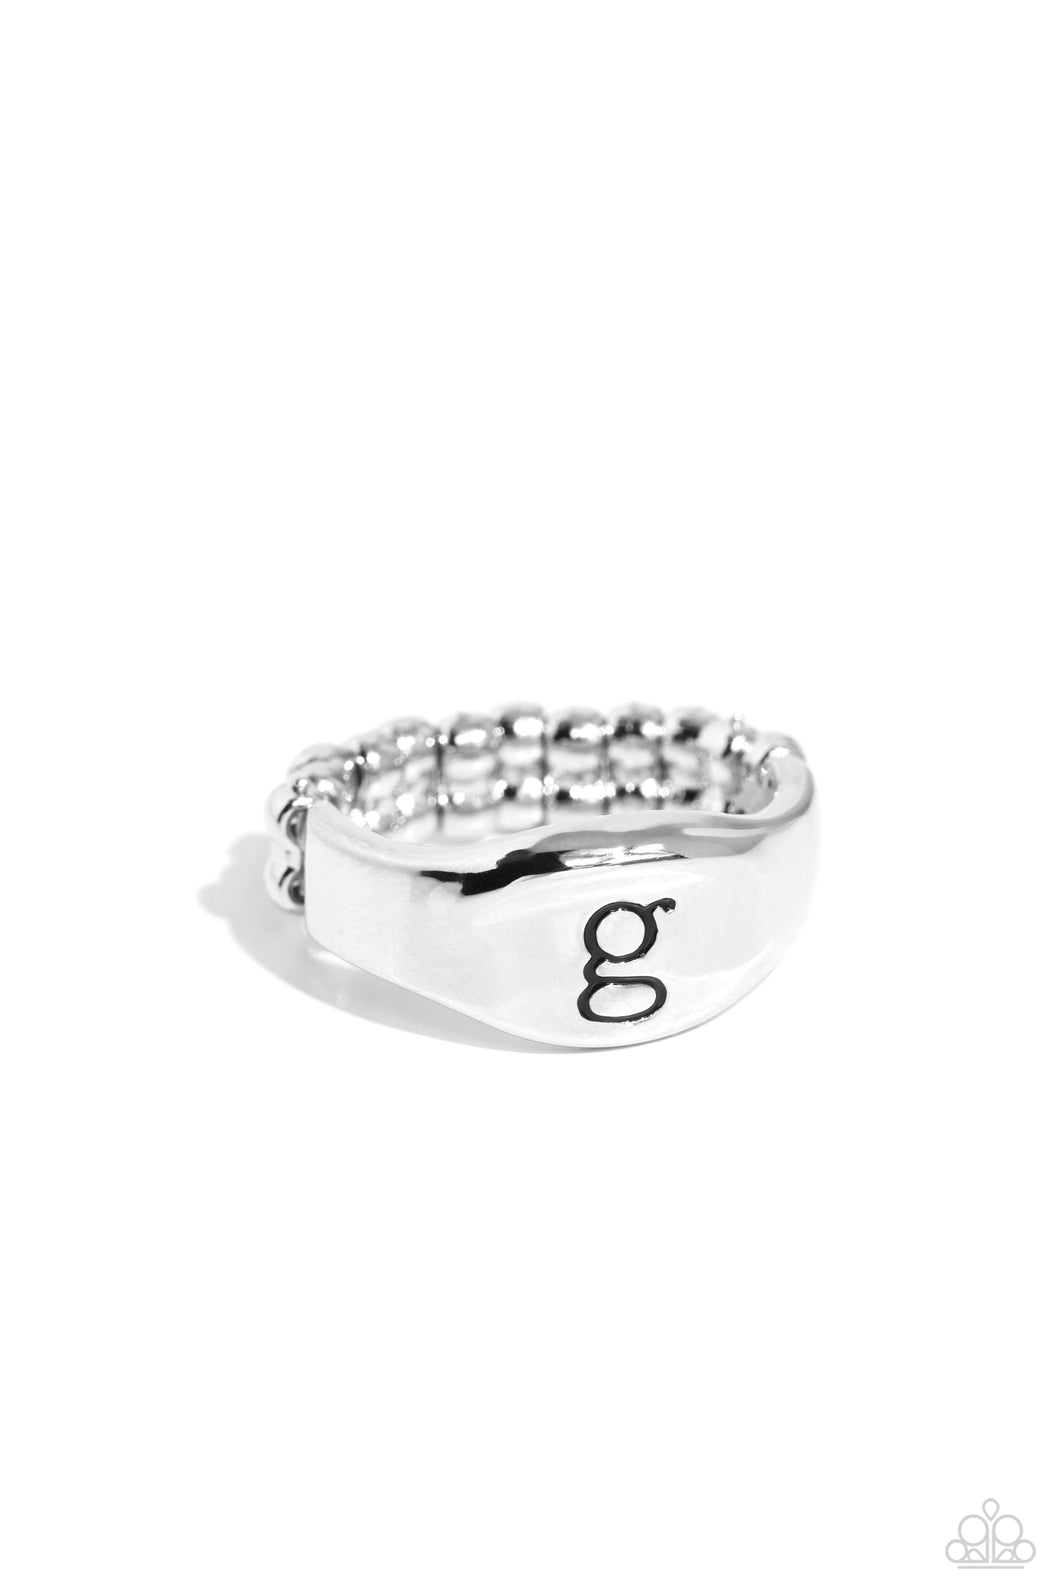 Monogram Memento - Silver - G Initial Ring